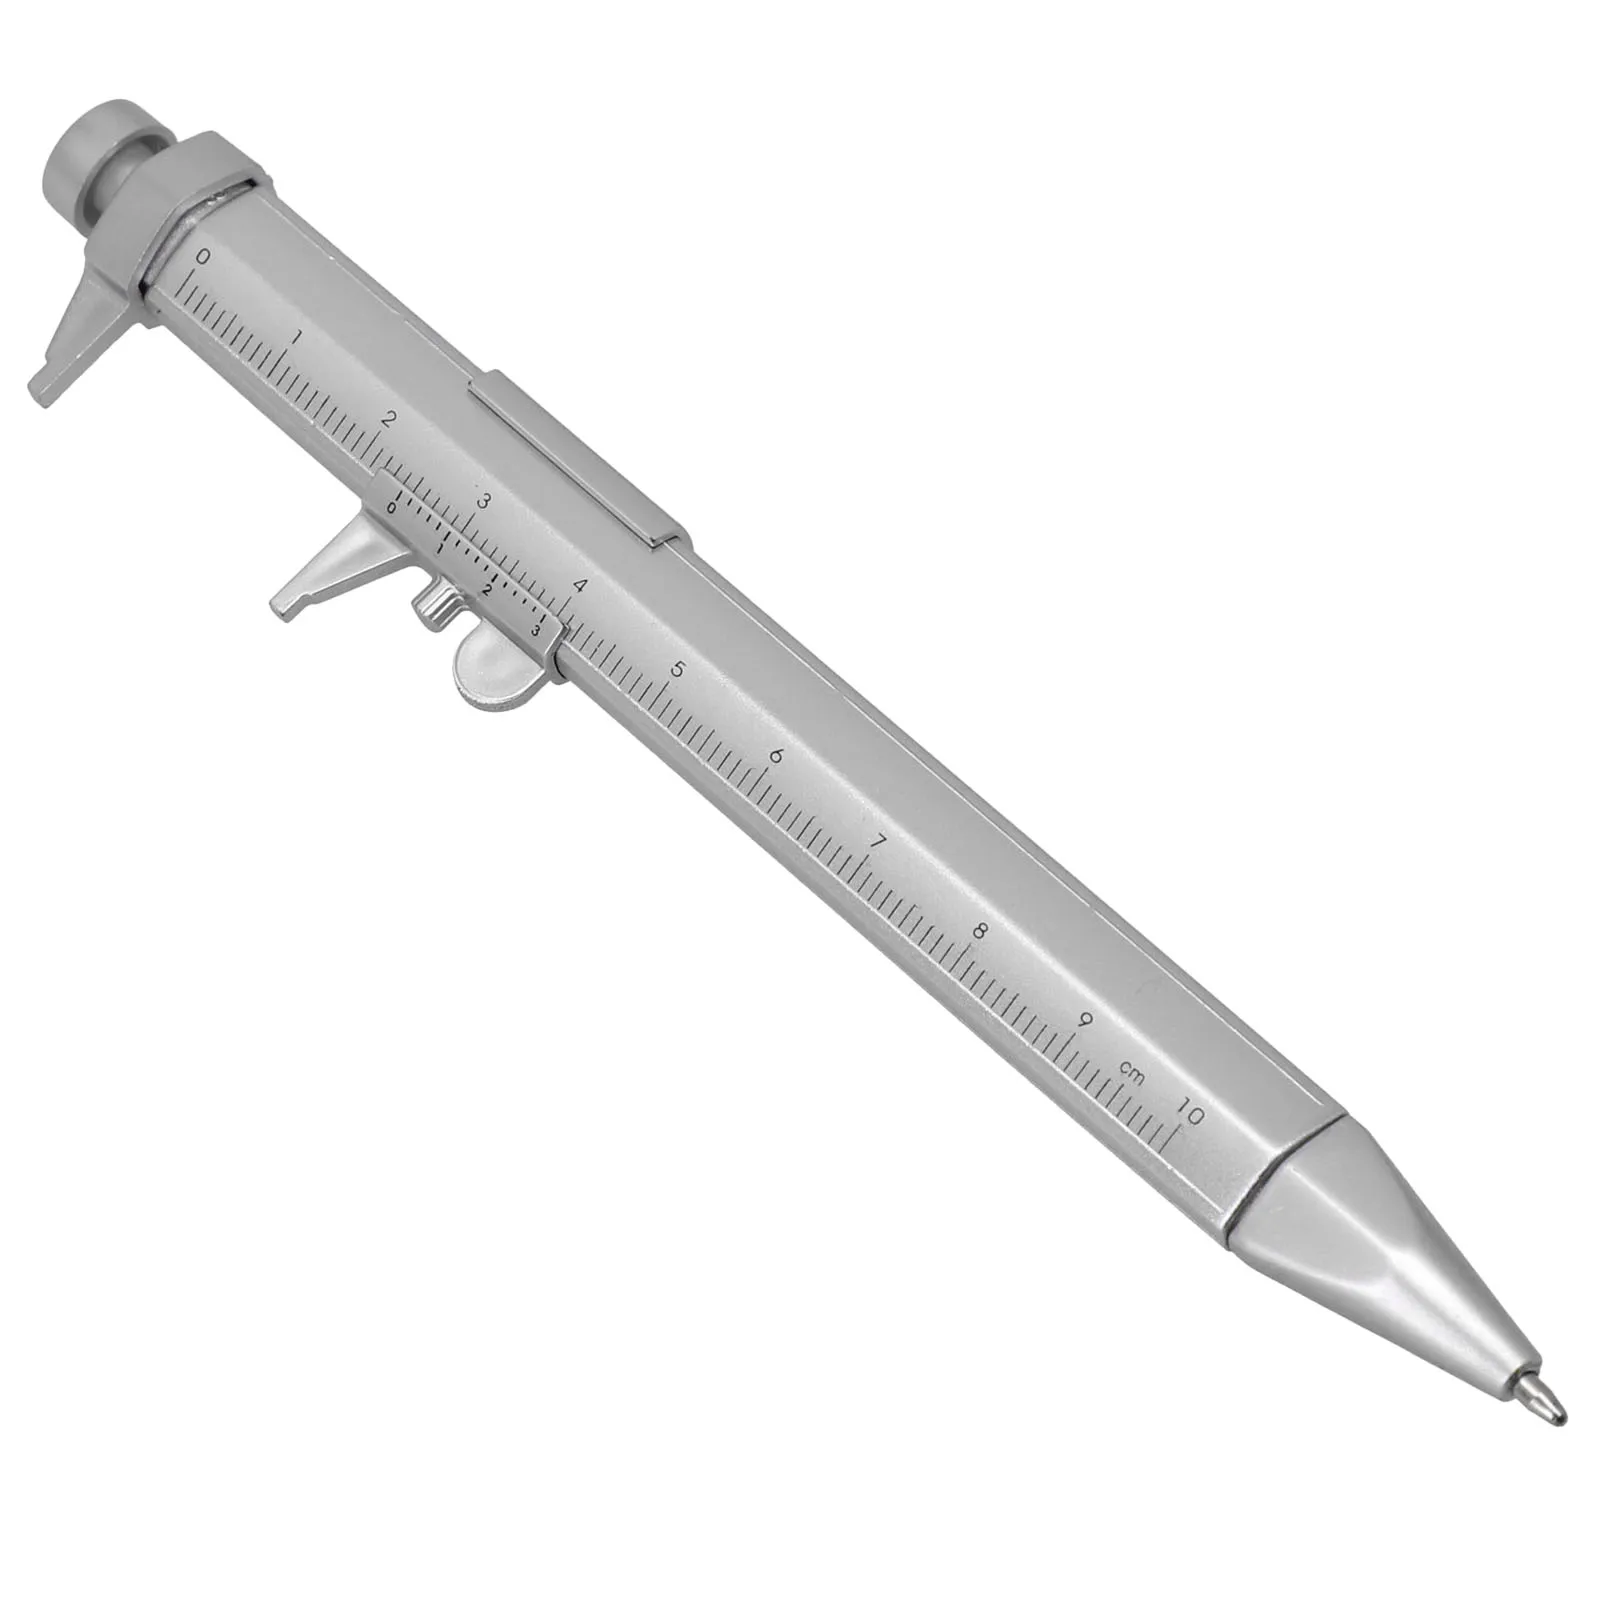 Durable Vernier Caliper Pen Stationery 0-100mm New Plastic Vernier Caliper Blue/Black Refill Blue/Black refill цена и фото